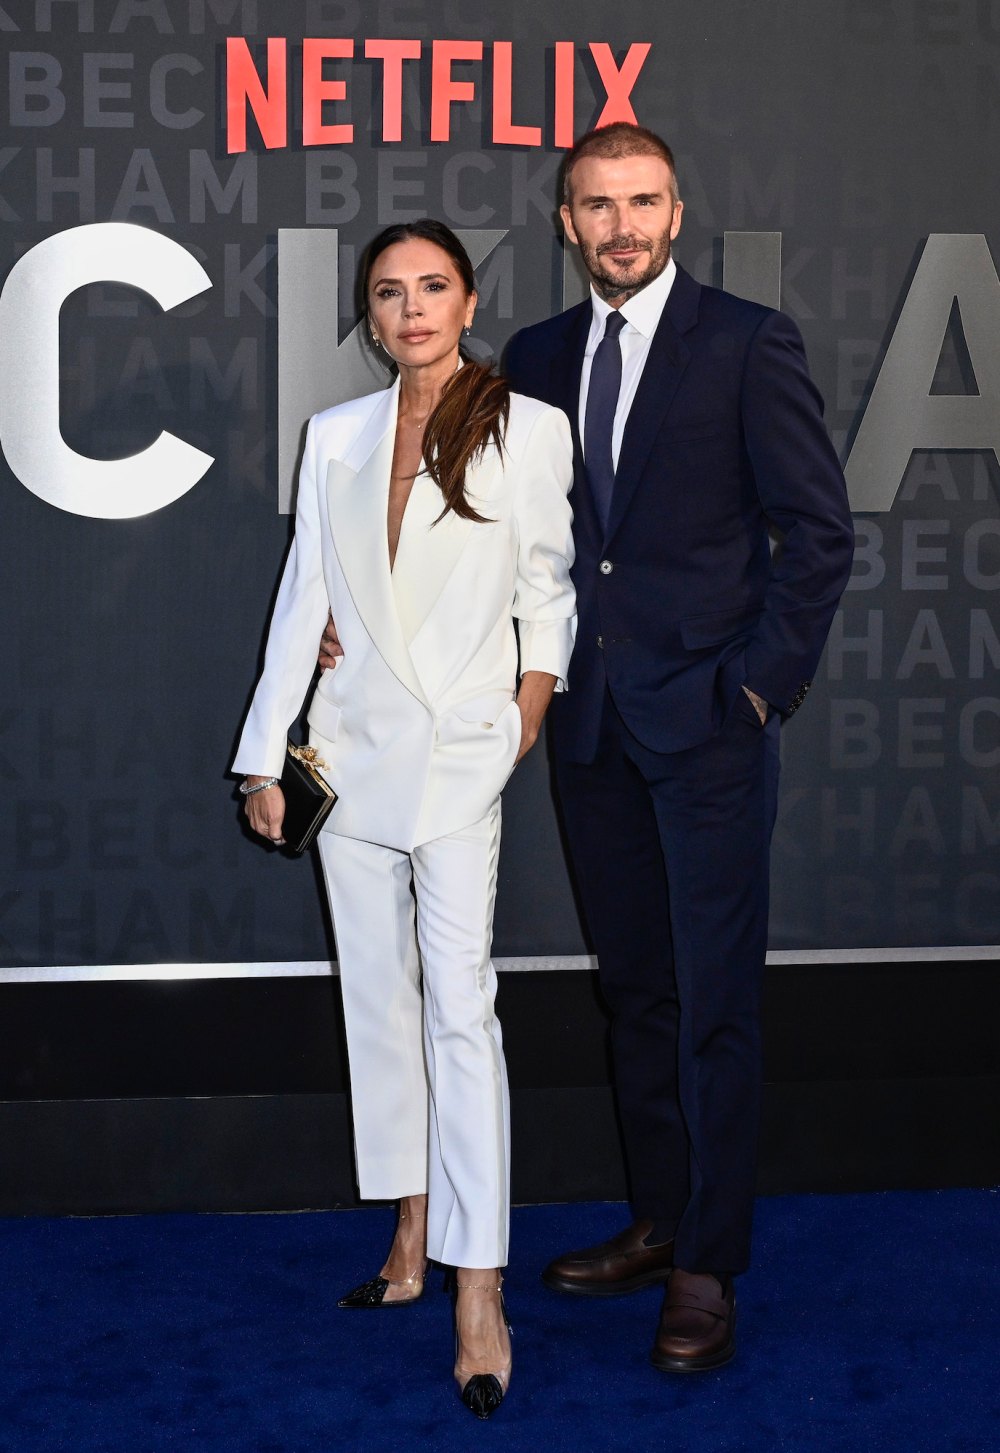 Victoria and David Beckham Attend 'Beckham' Premiere With All 4 Kids ...